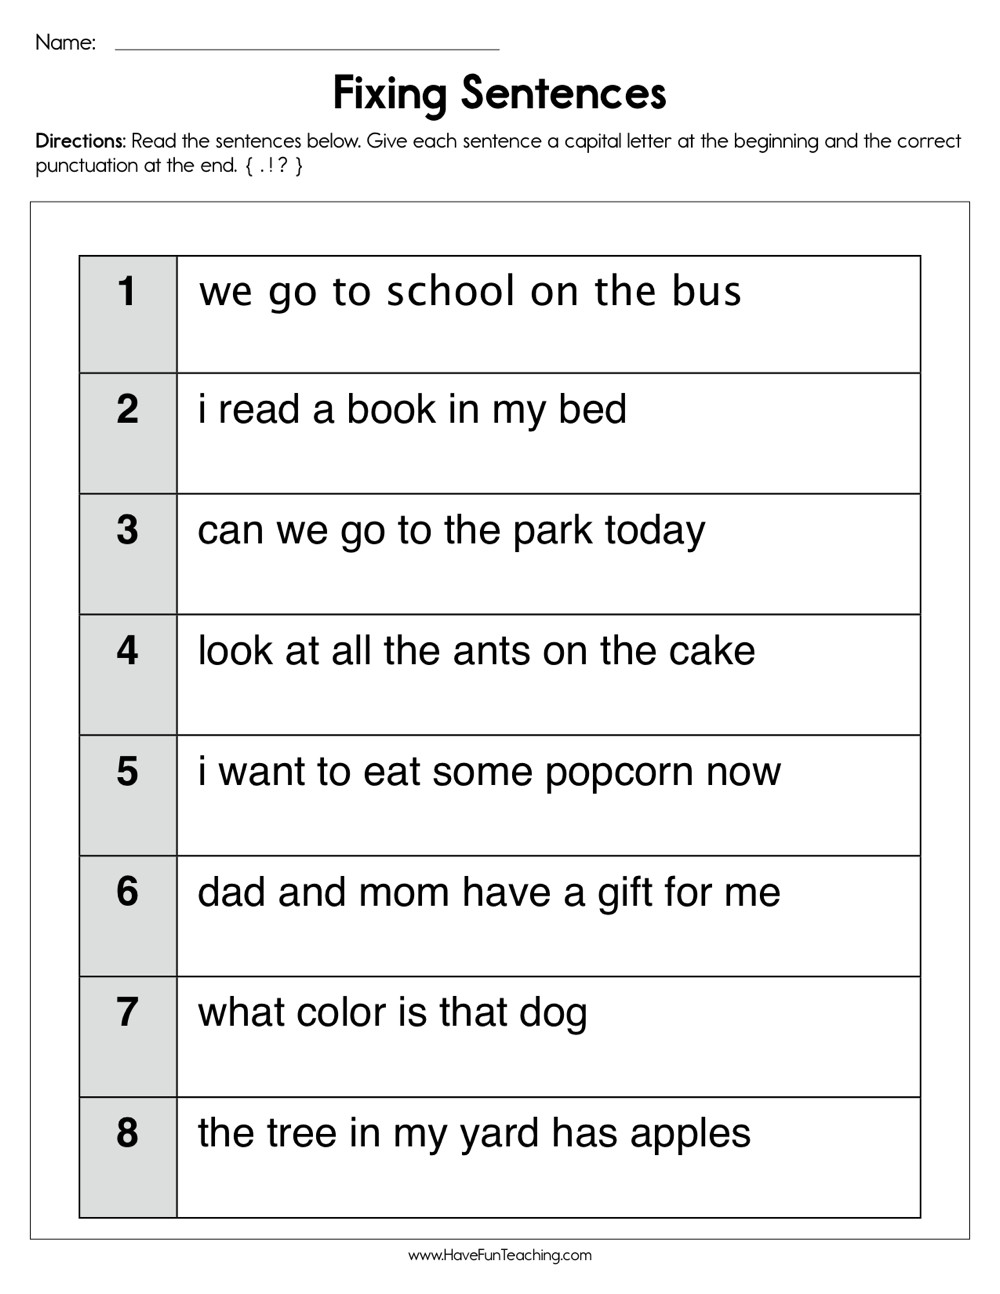 Third Grade Editing Worksheets Fixing Sentences Worksheet